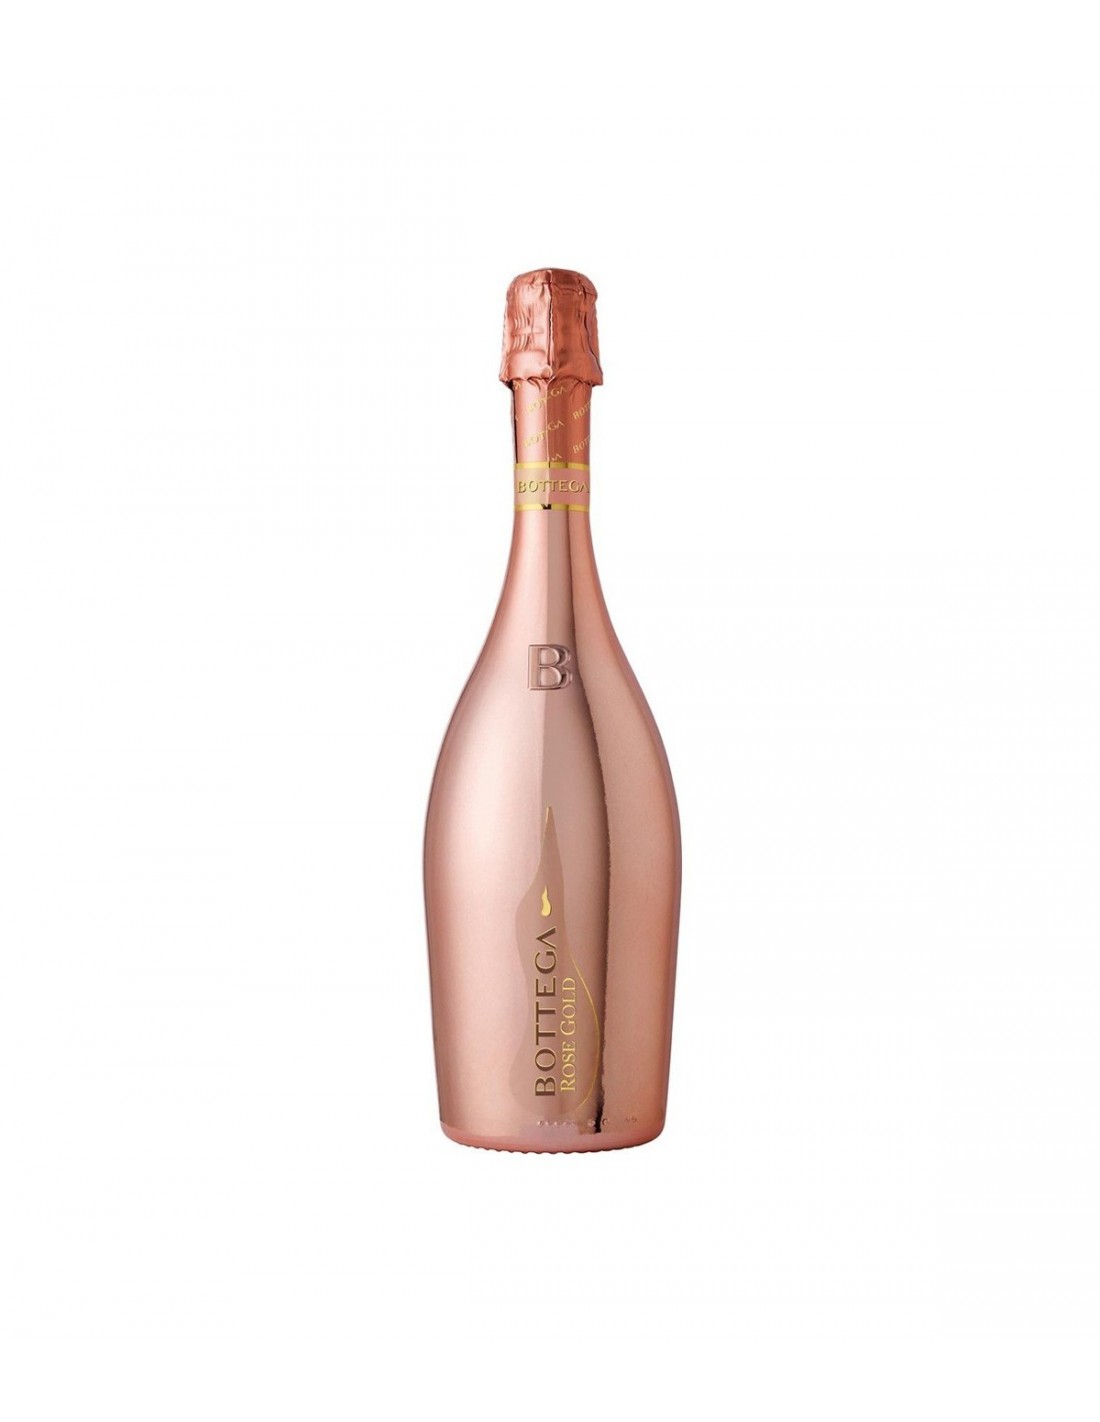 Vin spumant roze Pinot Noir, Bottega Rose Gold Brut, 0.75L, 11.5% alc., Italia alcooldiscount.ro